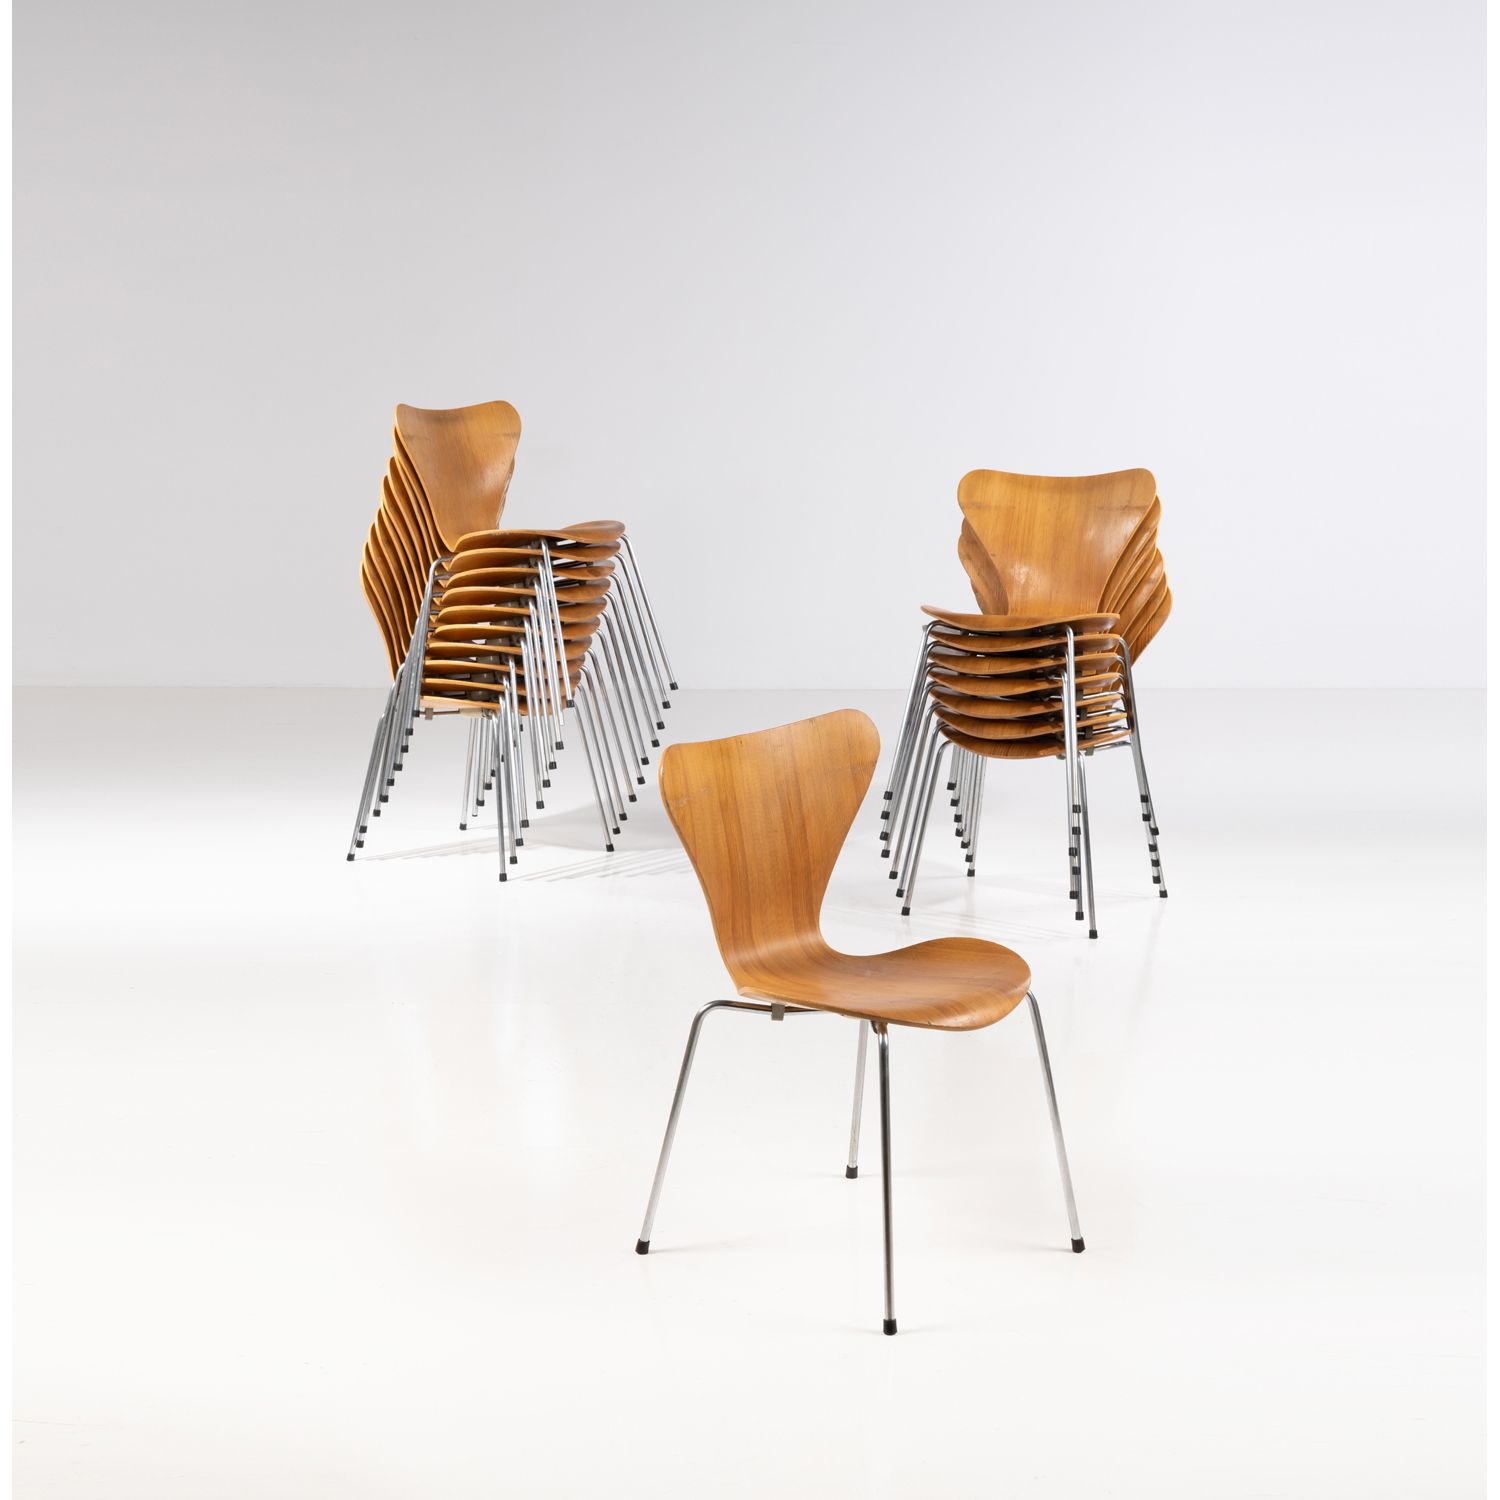 Null Arne Jacobsen (1902-1971)

Modelo nº 3107

Conjunto de dieciocho sillas

Pi&hellip;